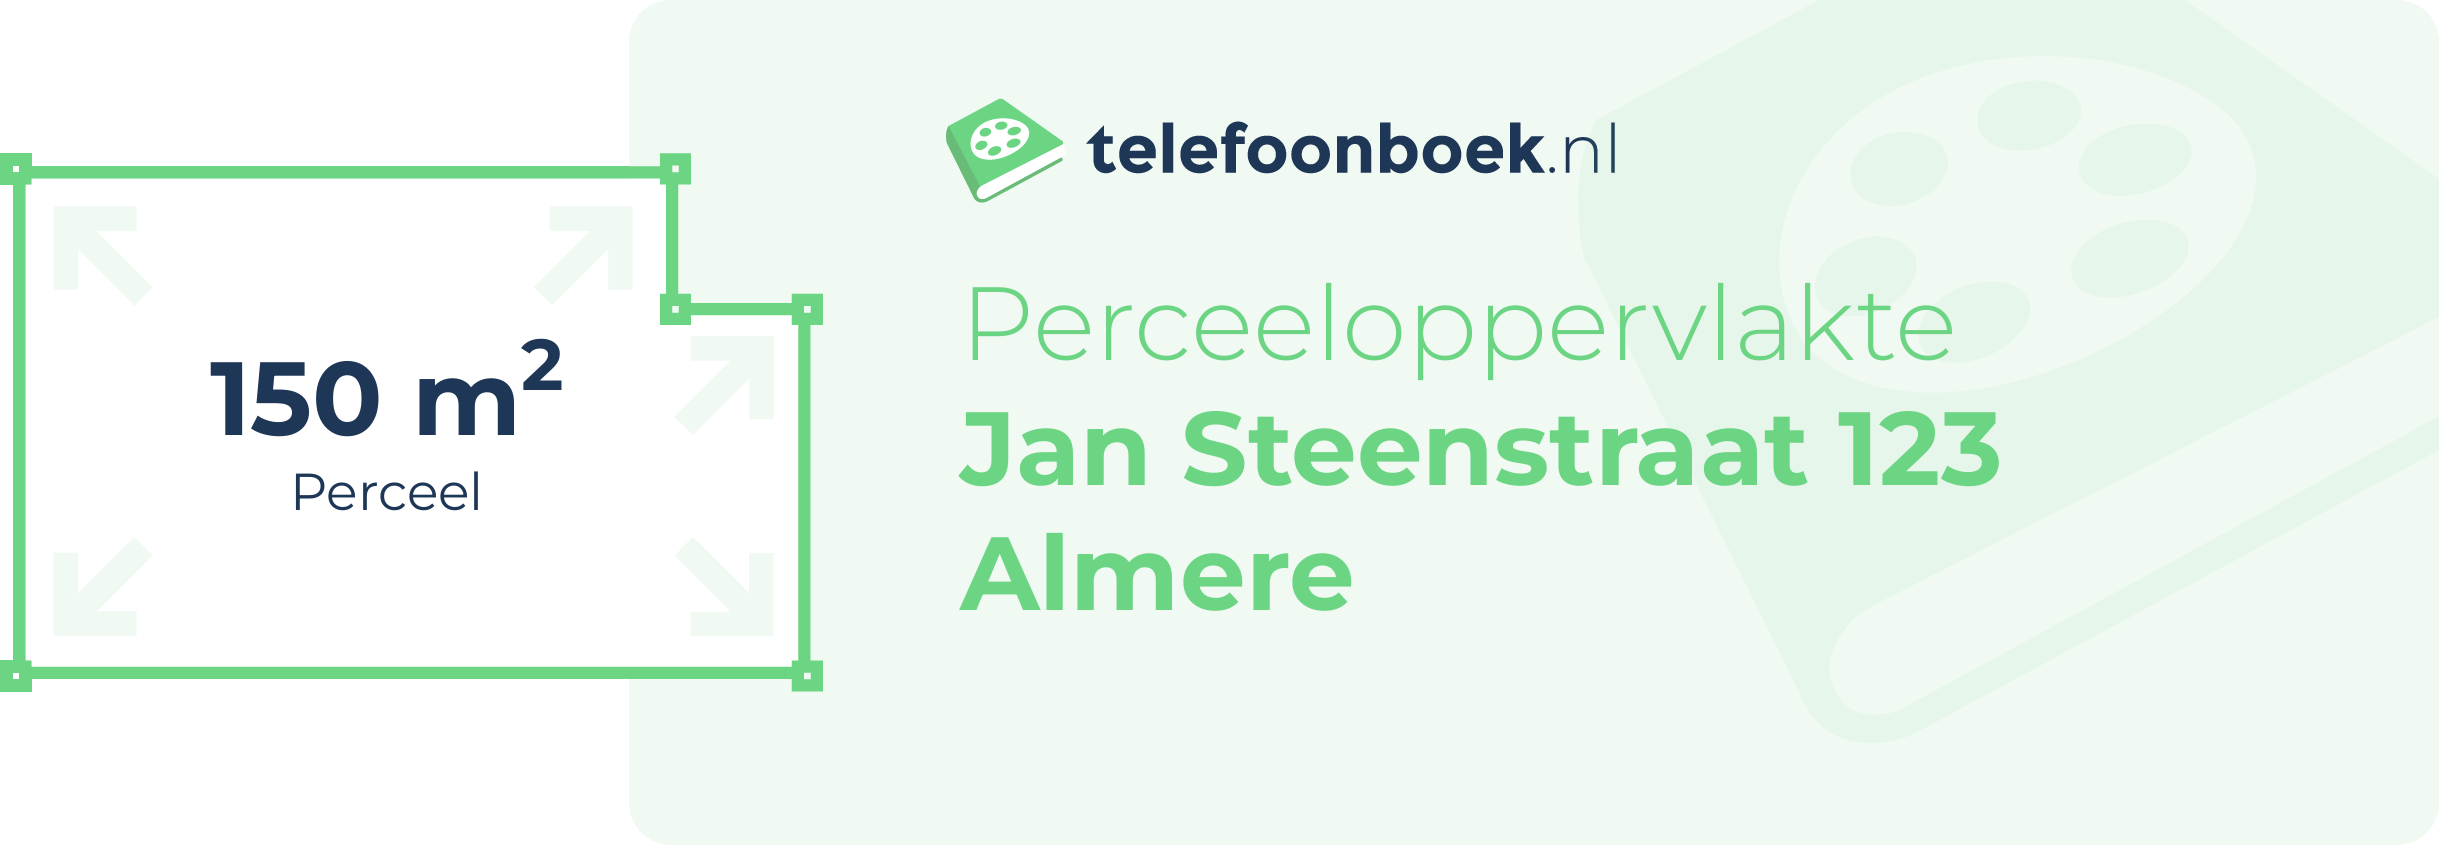 Perceeloppervlakte Jan Steenstraat 123 Almere